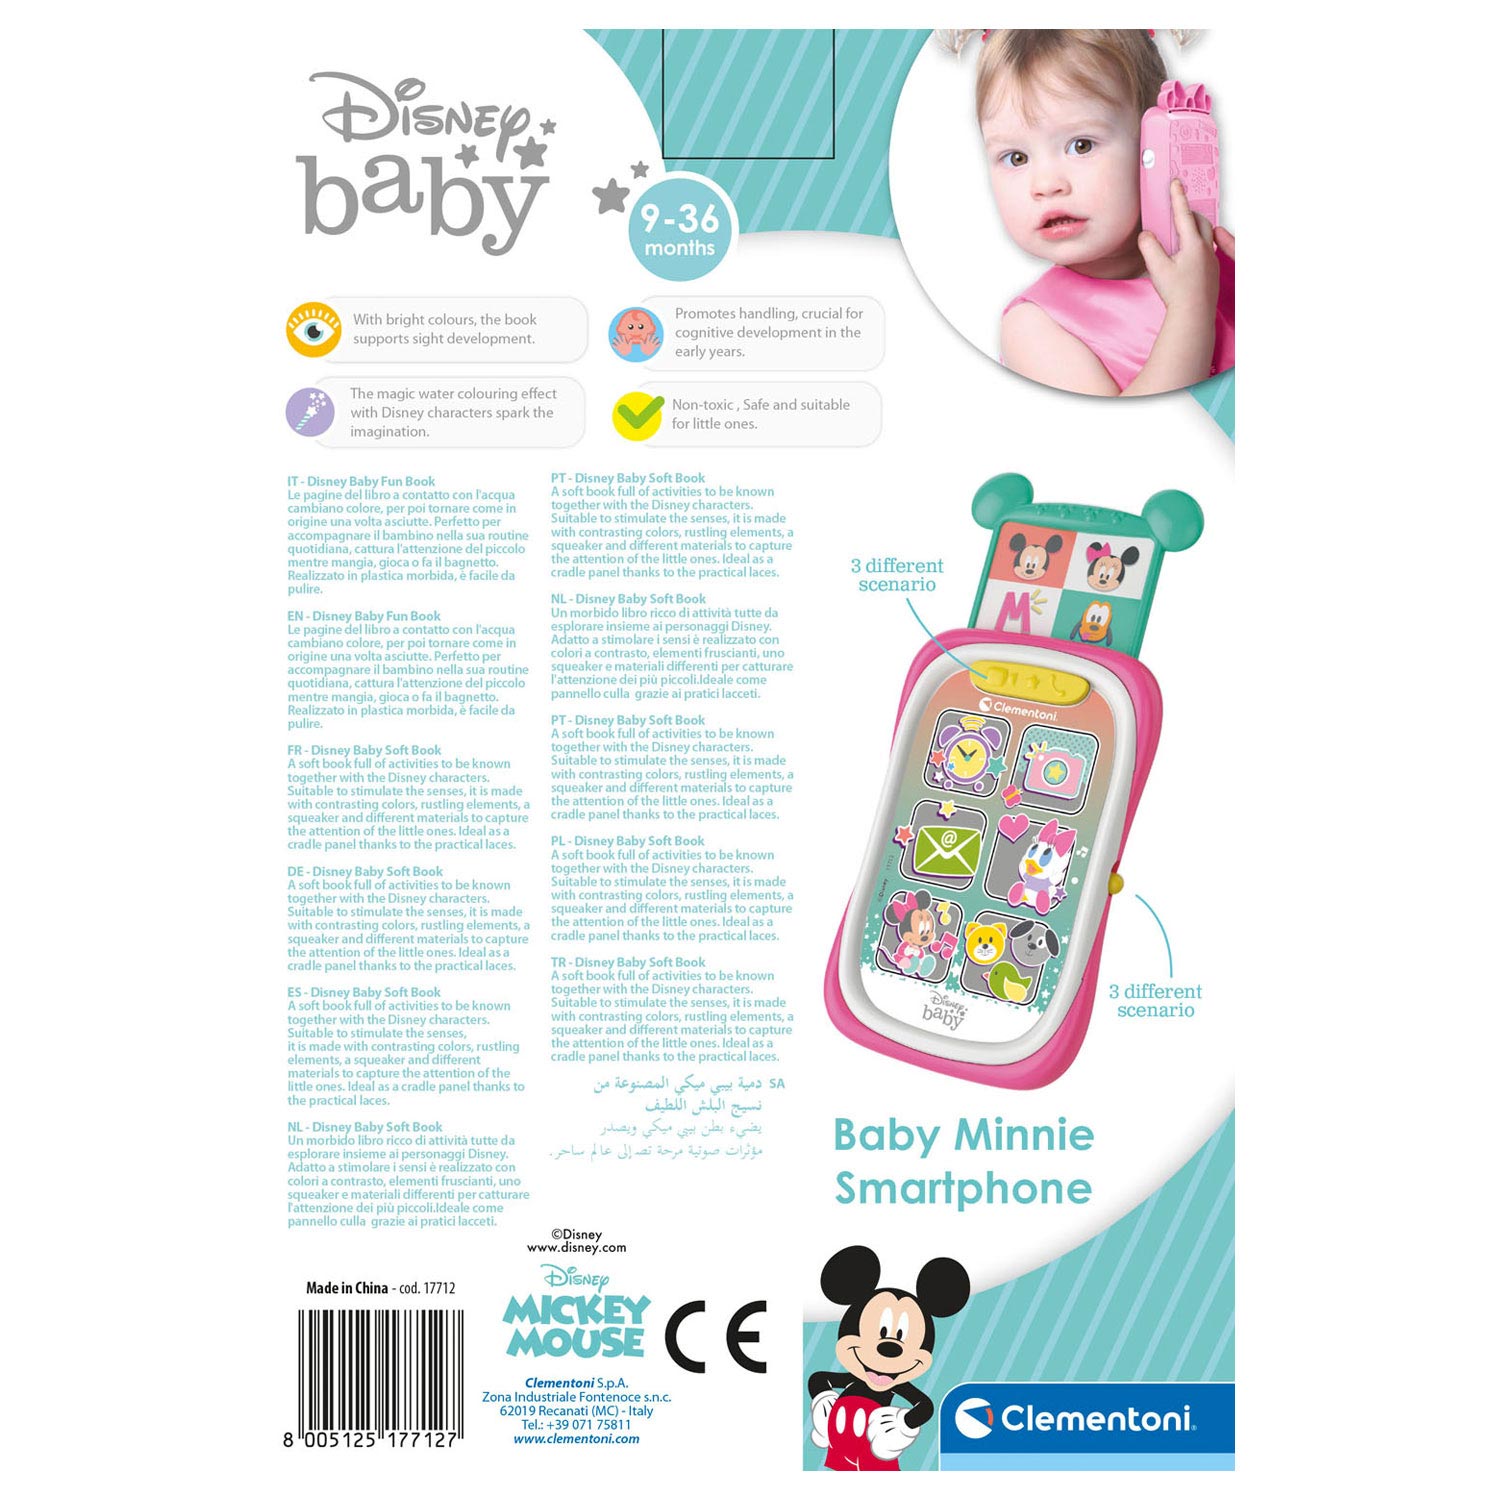 Clementoni Disney Baby - Minnie Mouse Telefoon